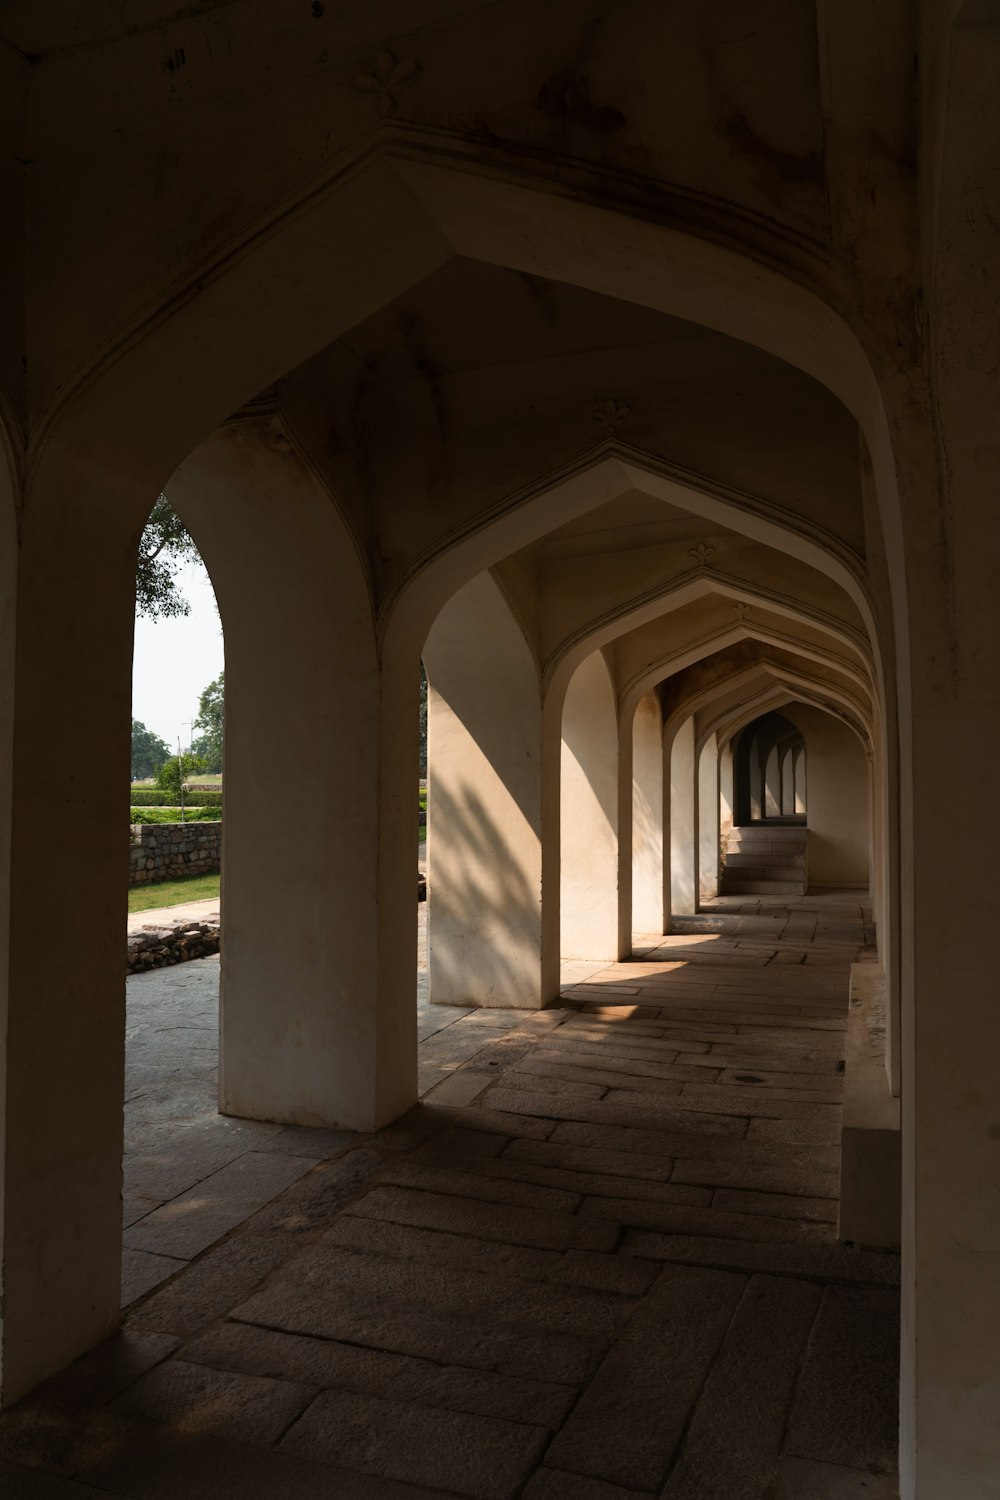 a stone walkway with pillars